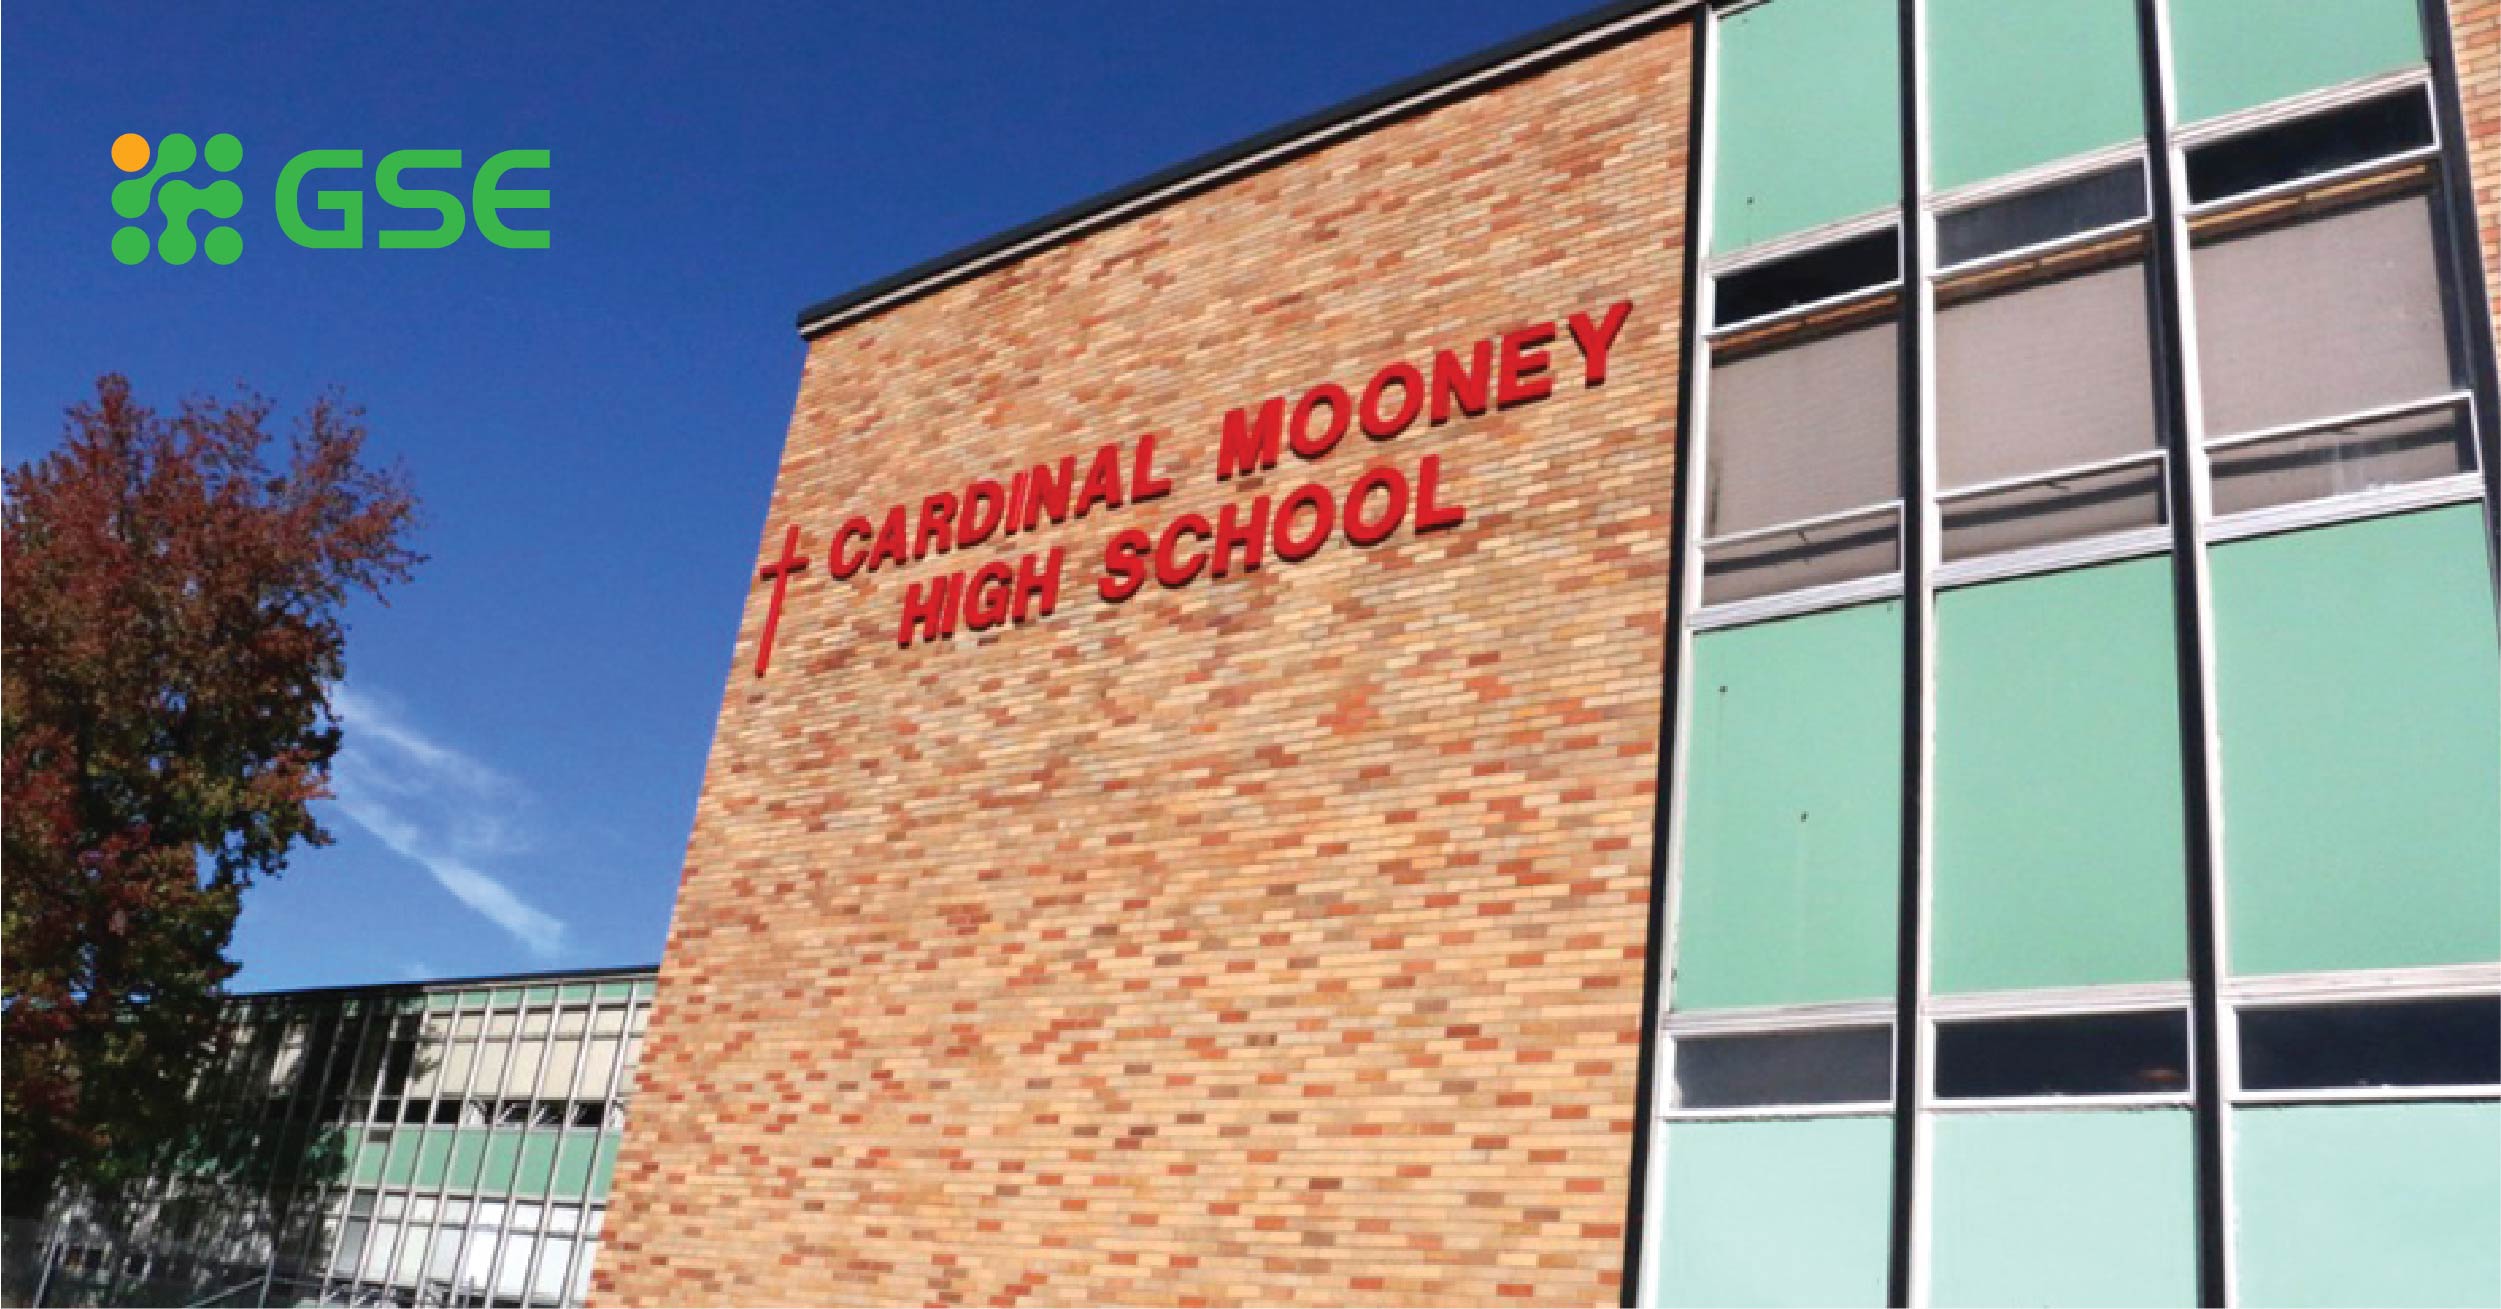 Cardinal Mooney High School 02